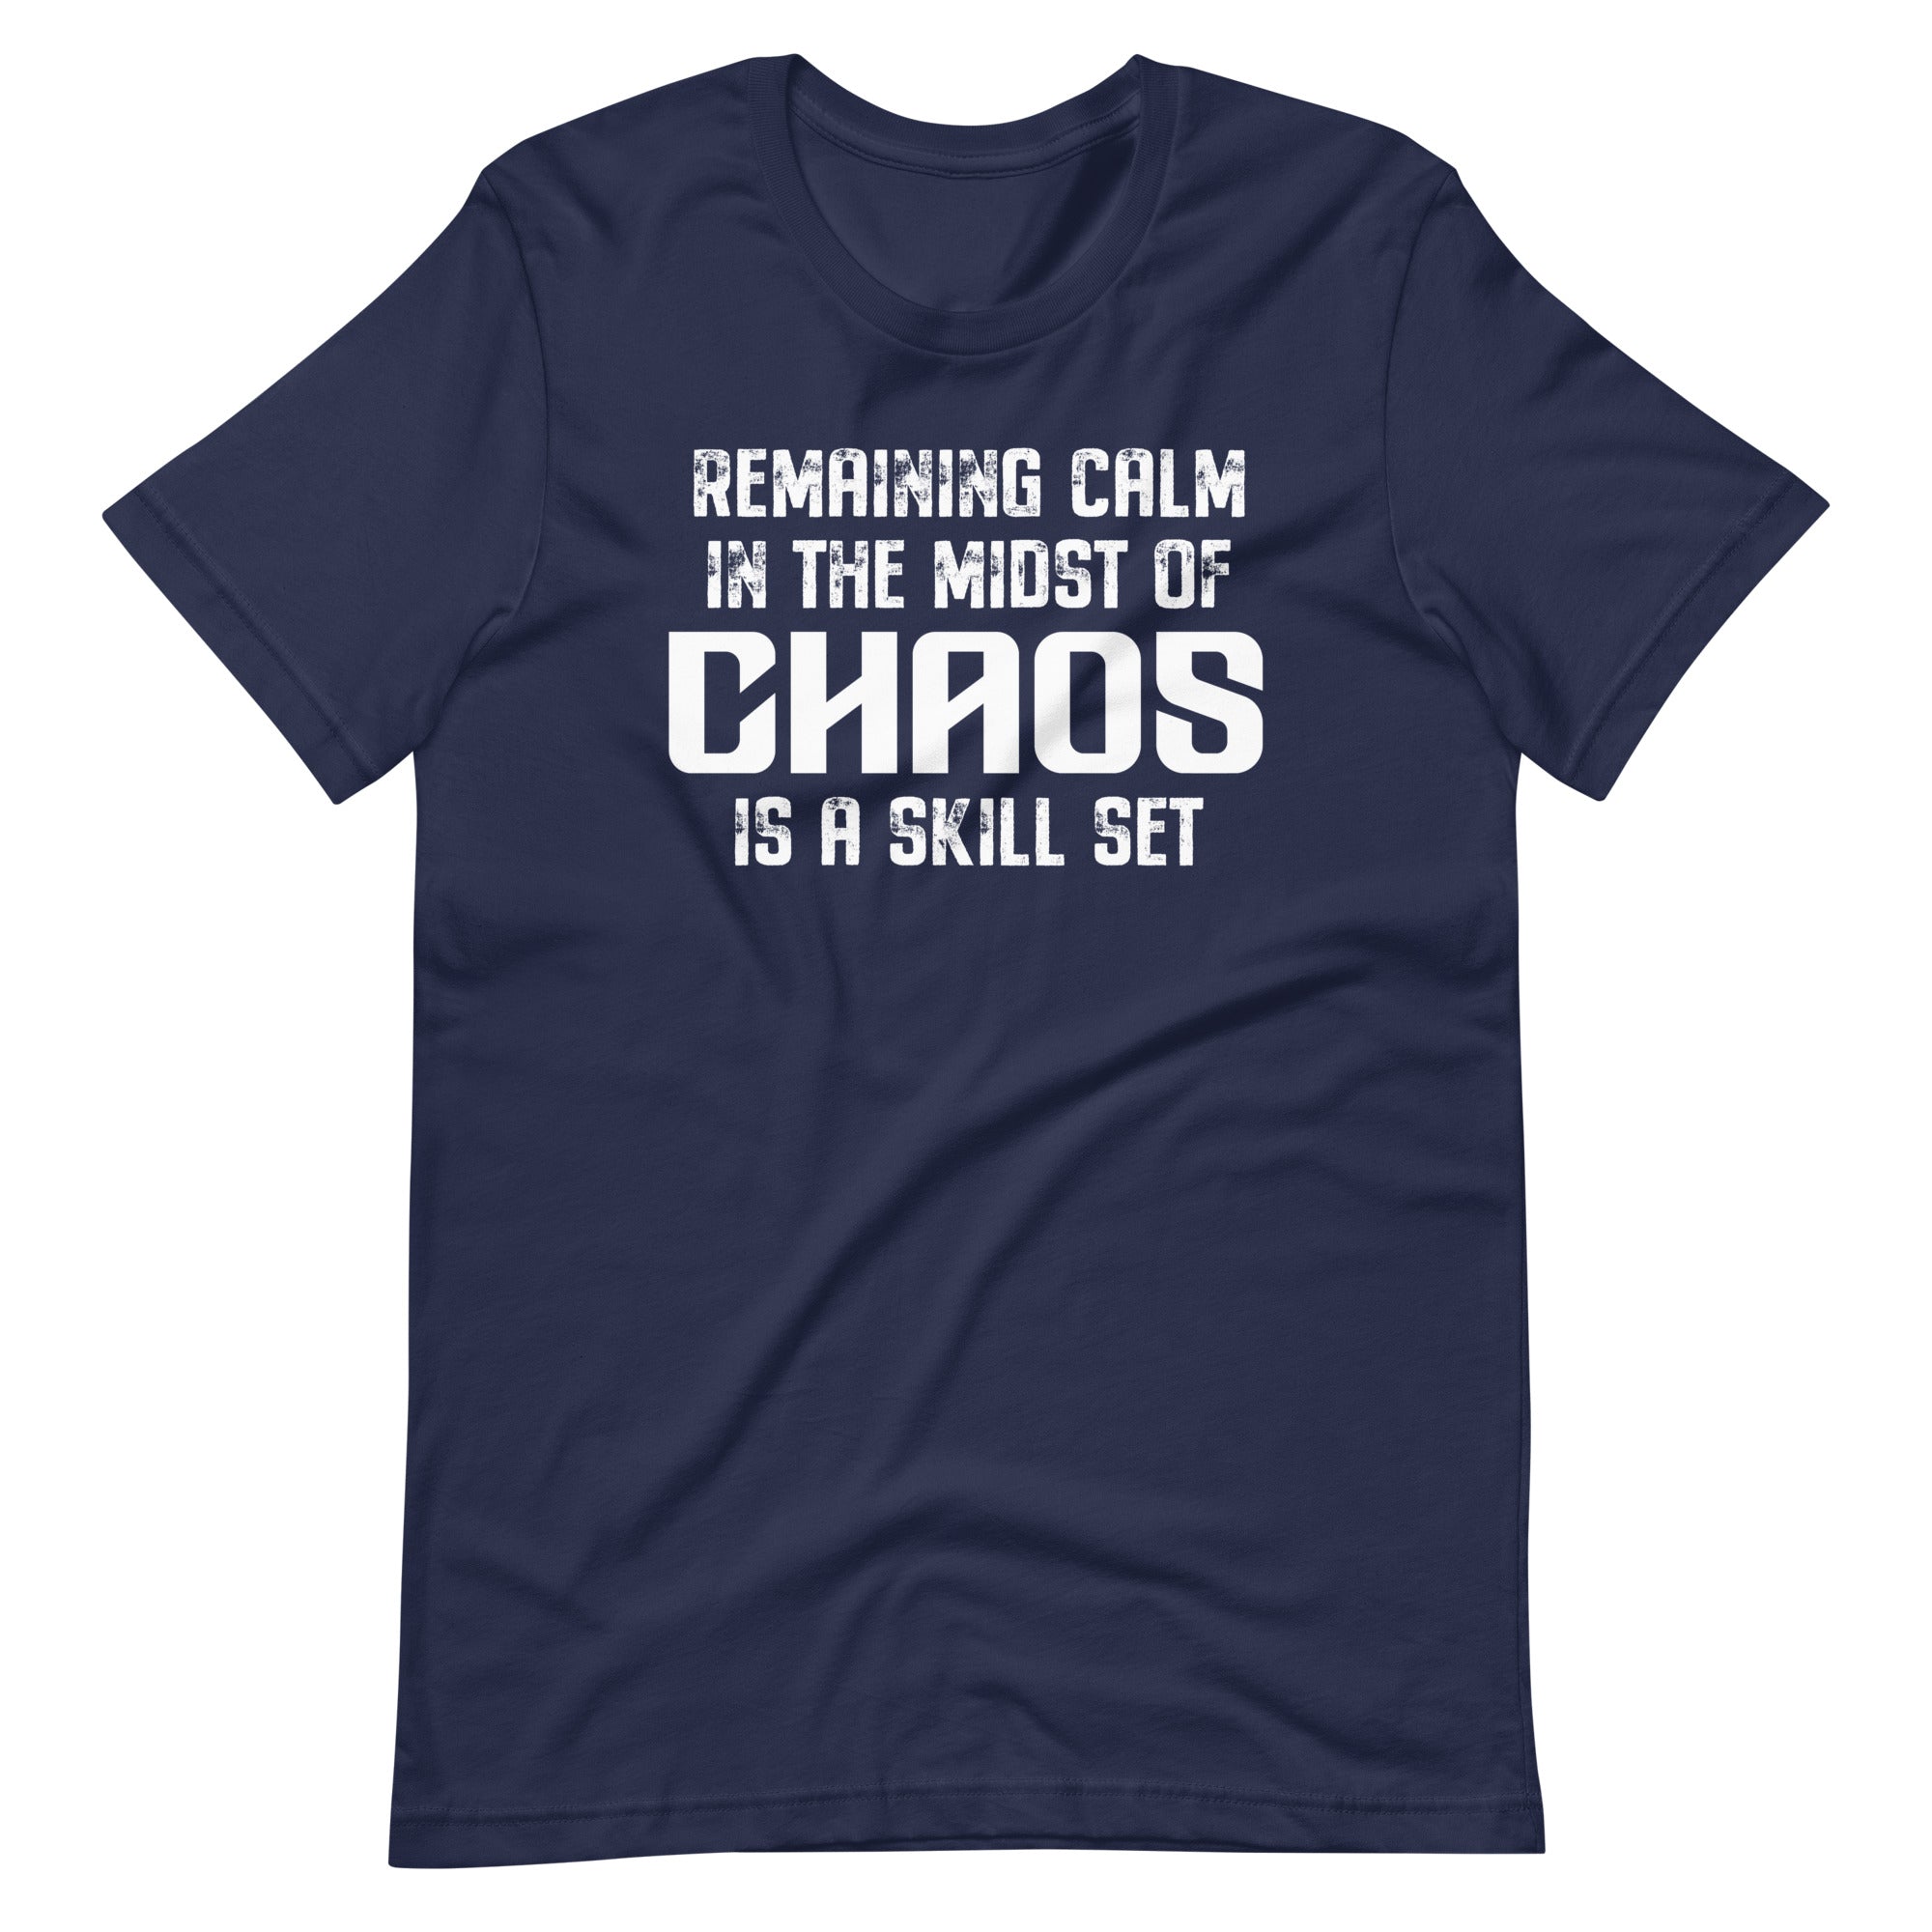 Mike Sorrentino Chaos Shirt